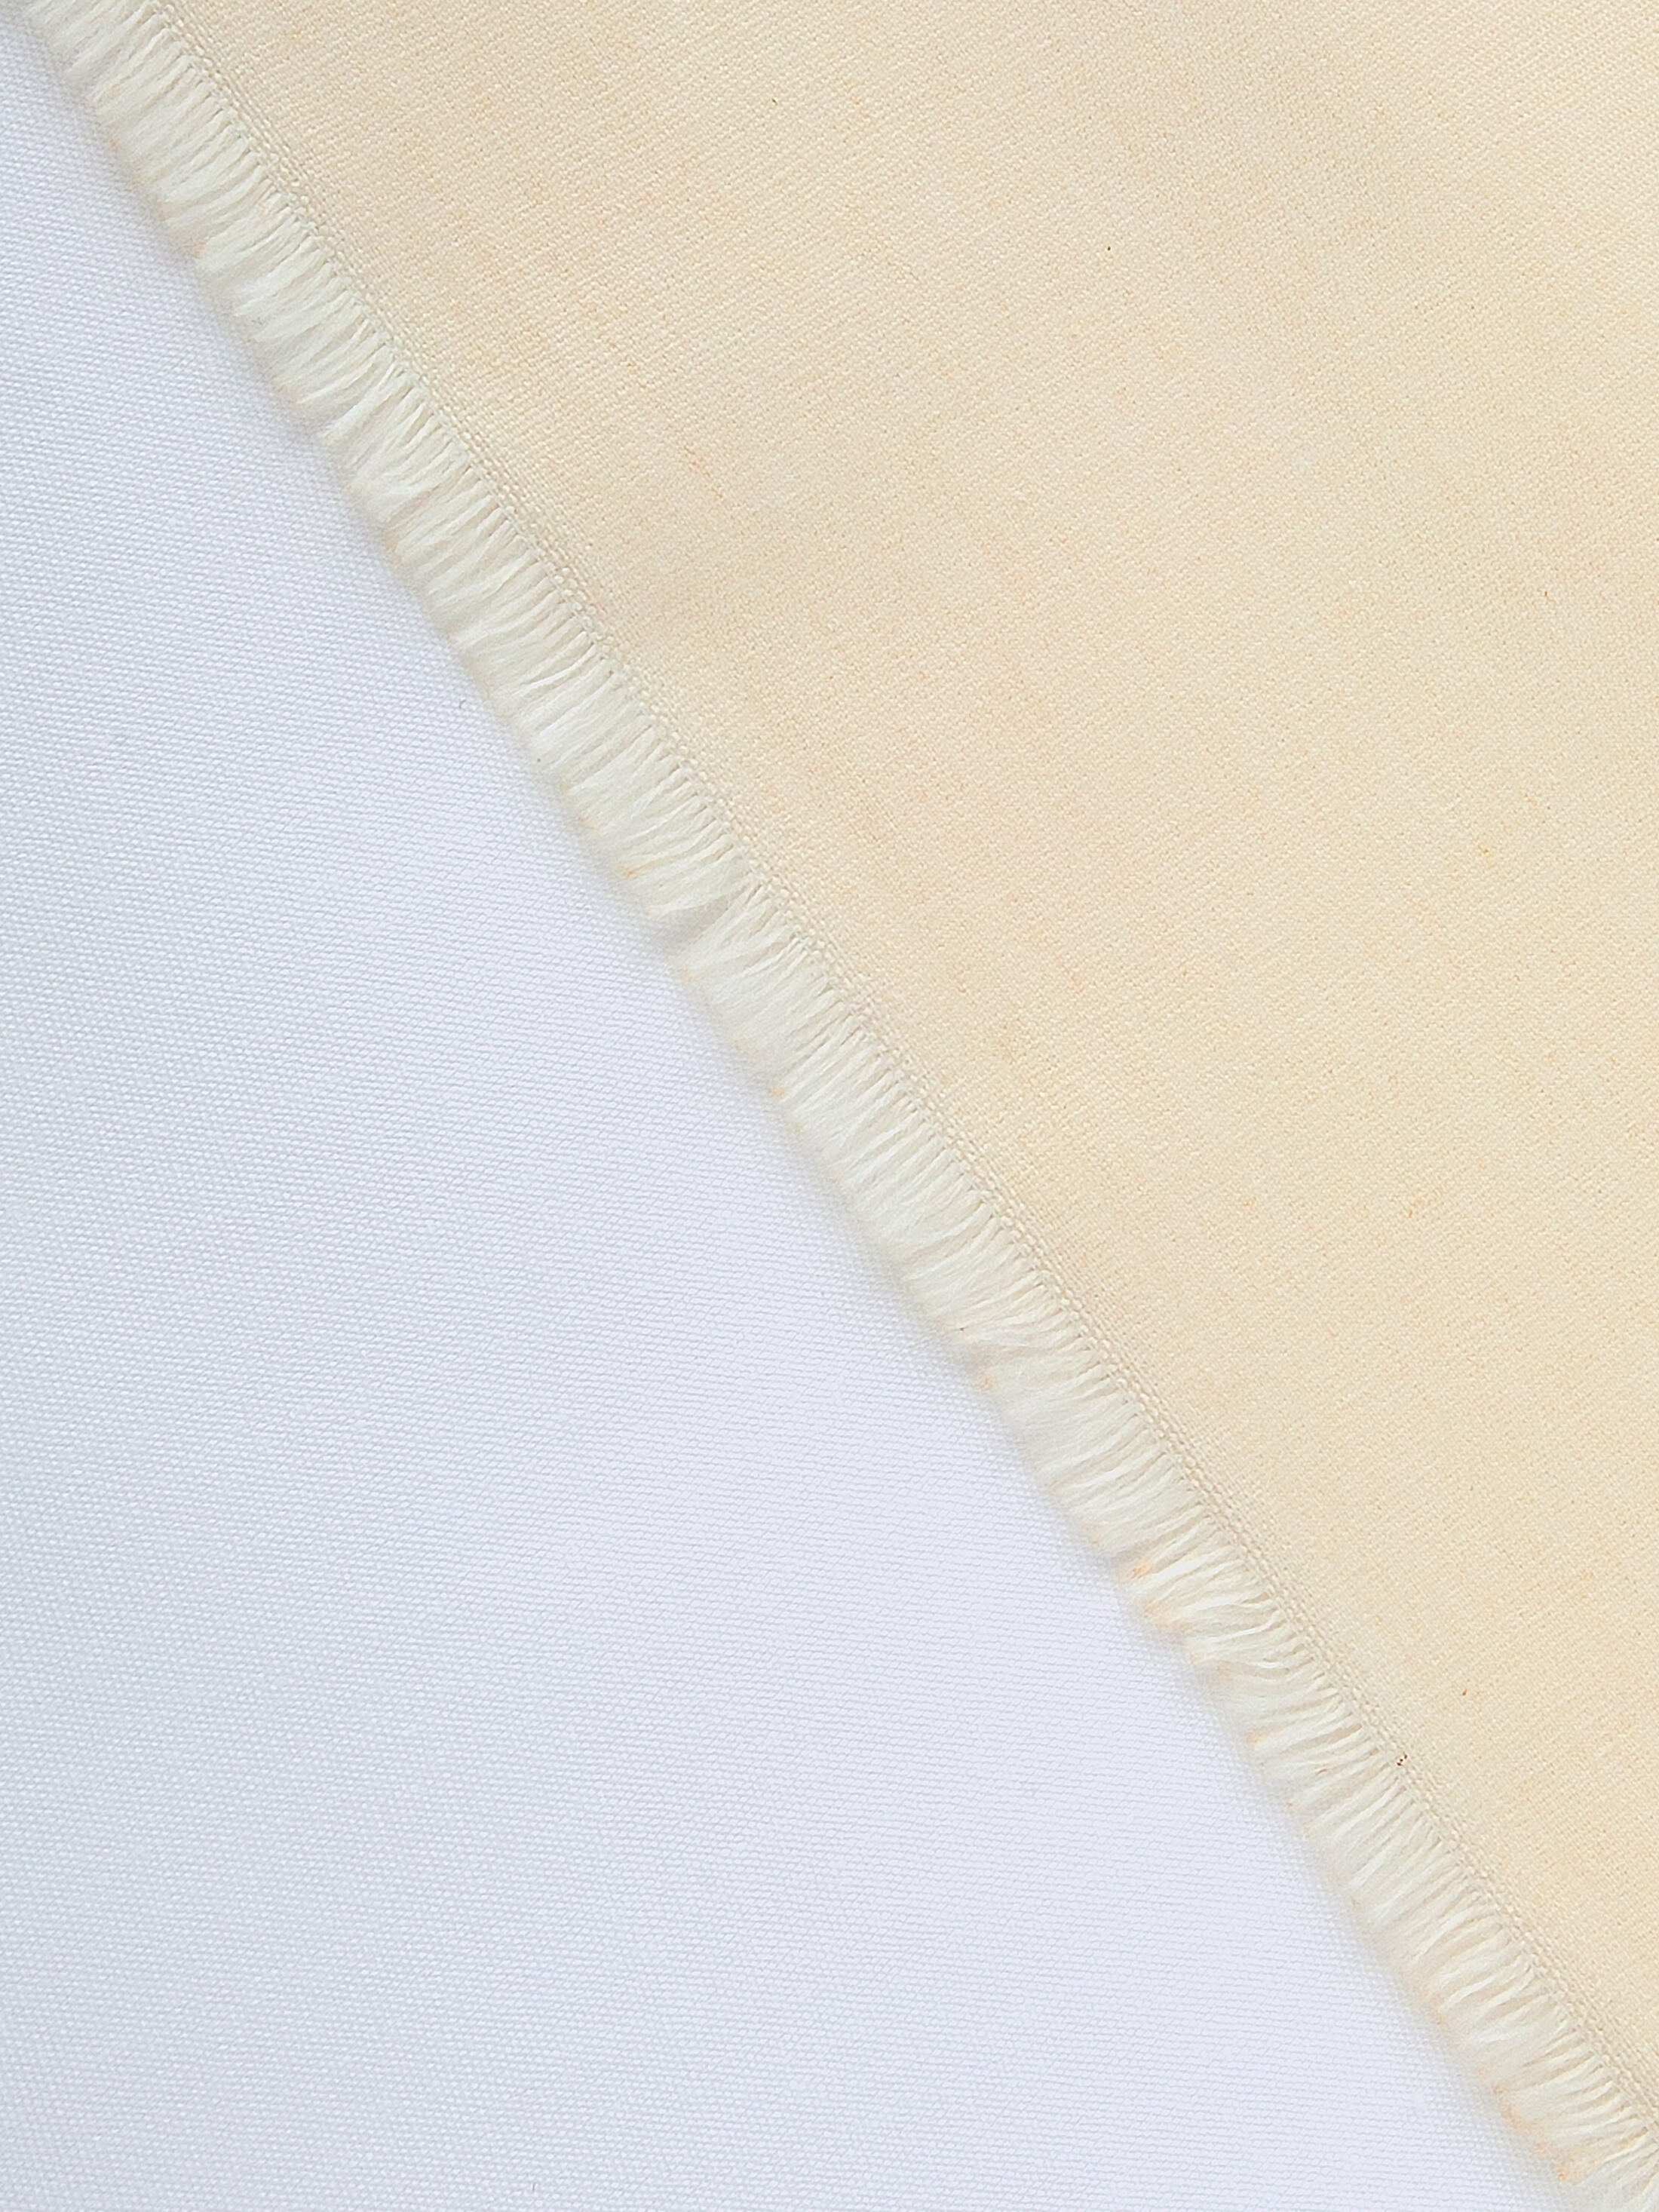 Custom Printed Cotton Poplin Fabric. Organic Cotton Poplin.